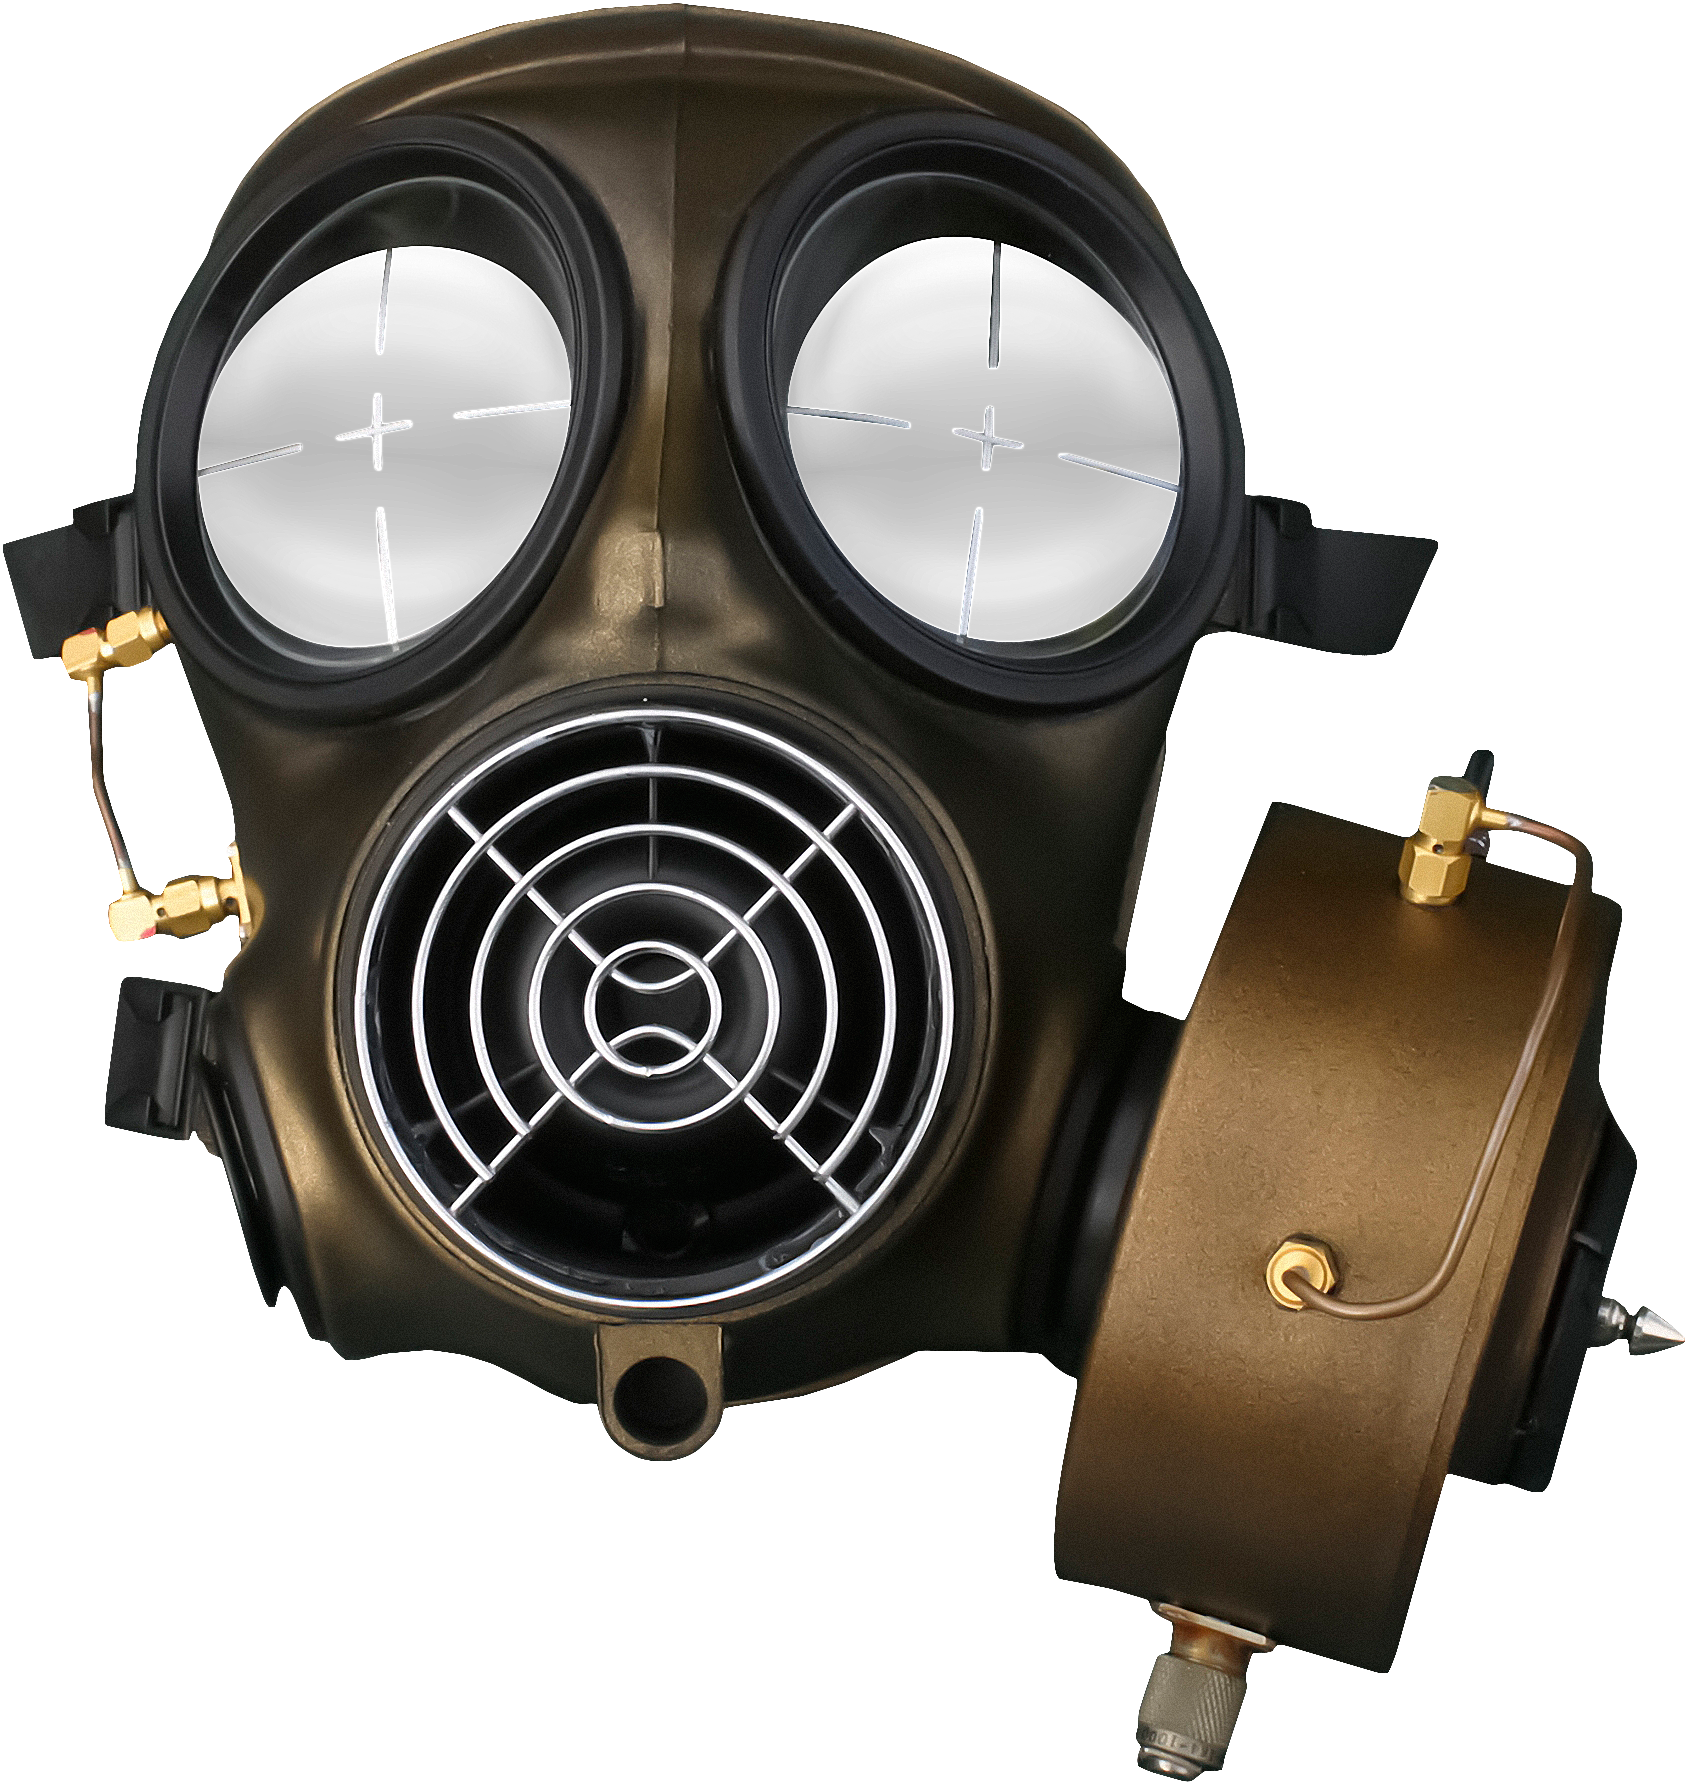 Masker gas